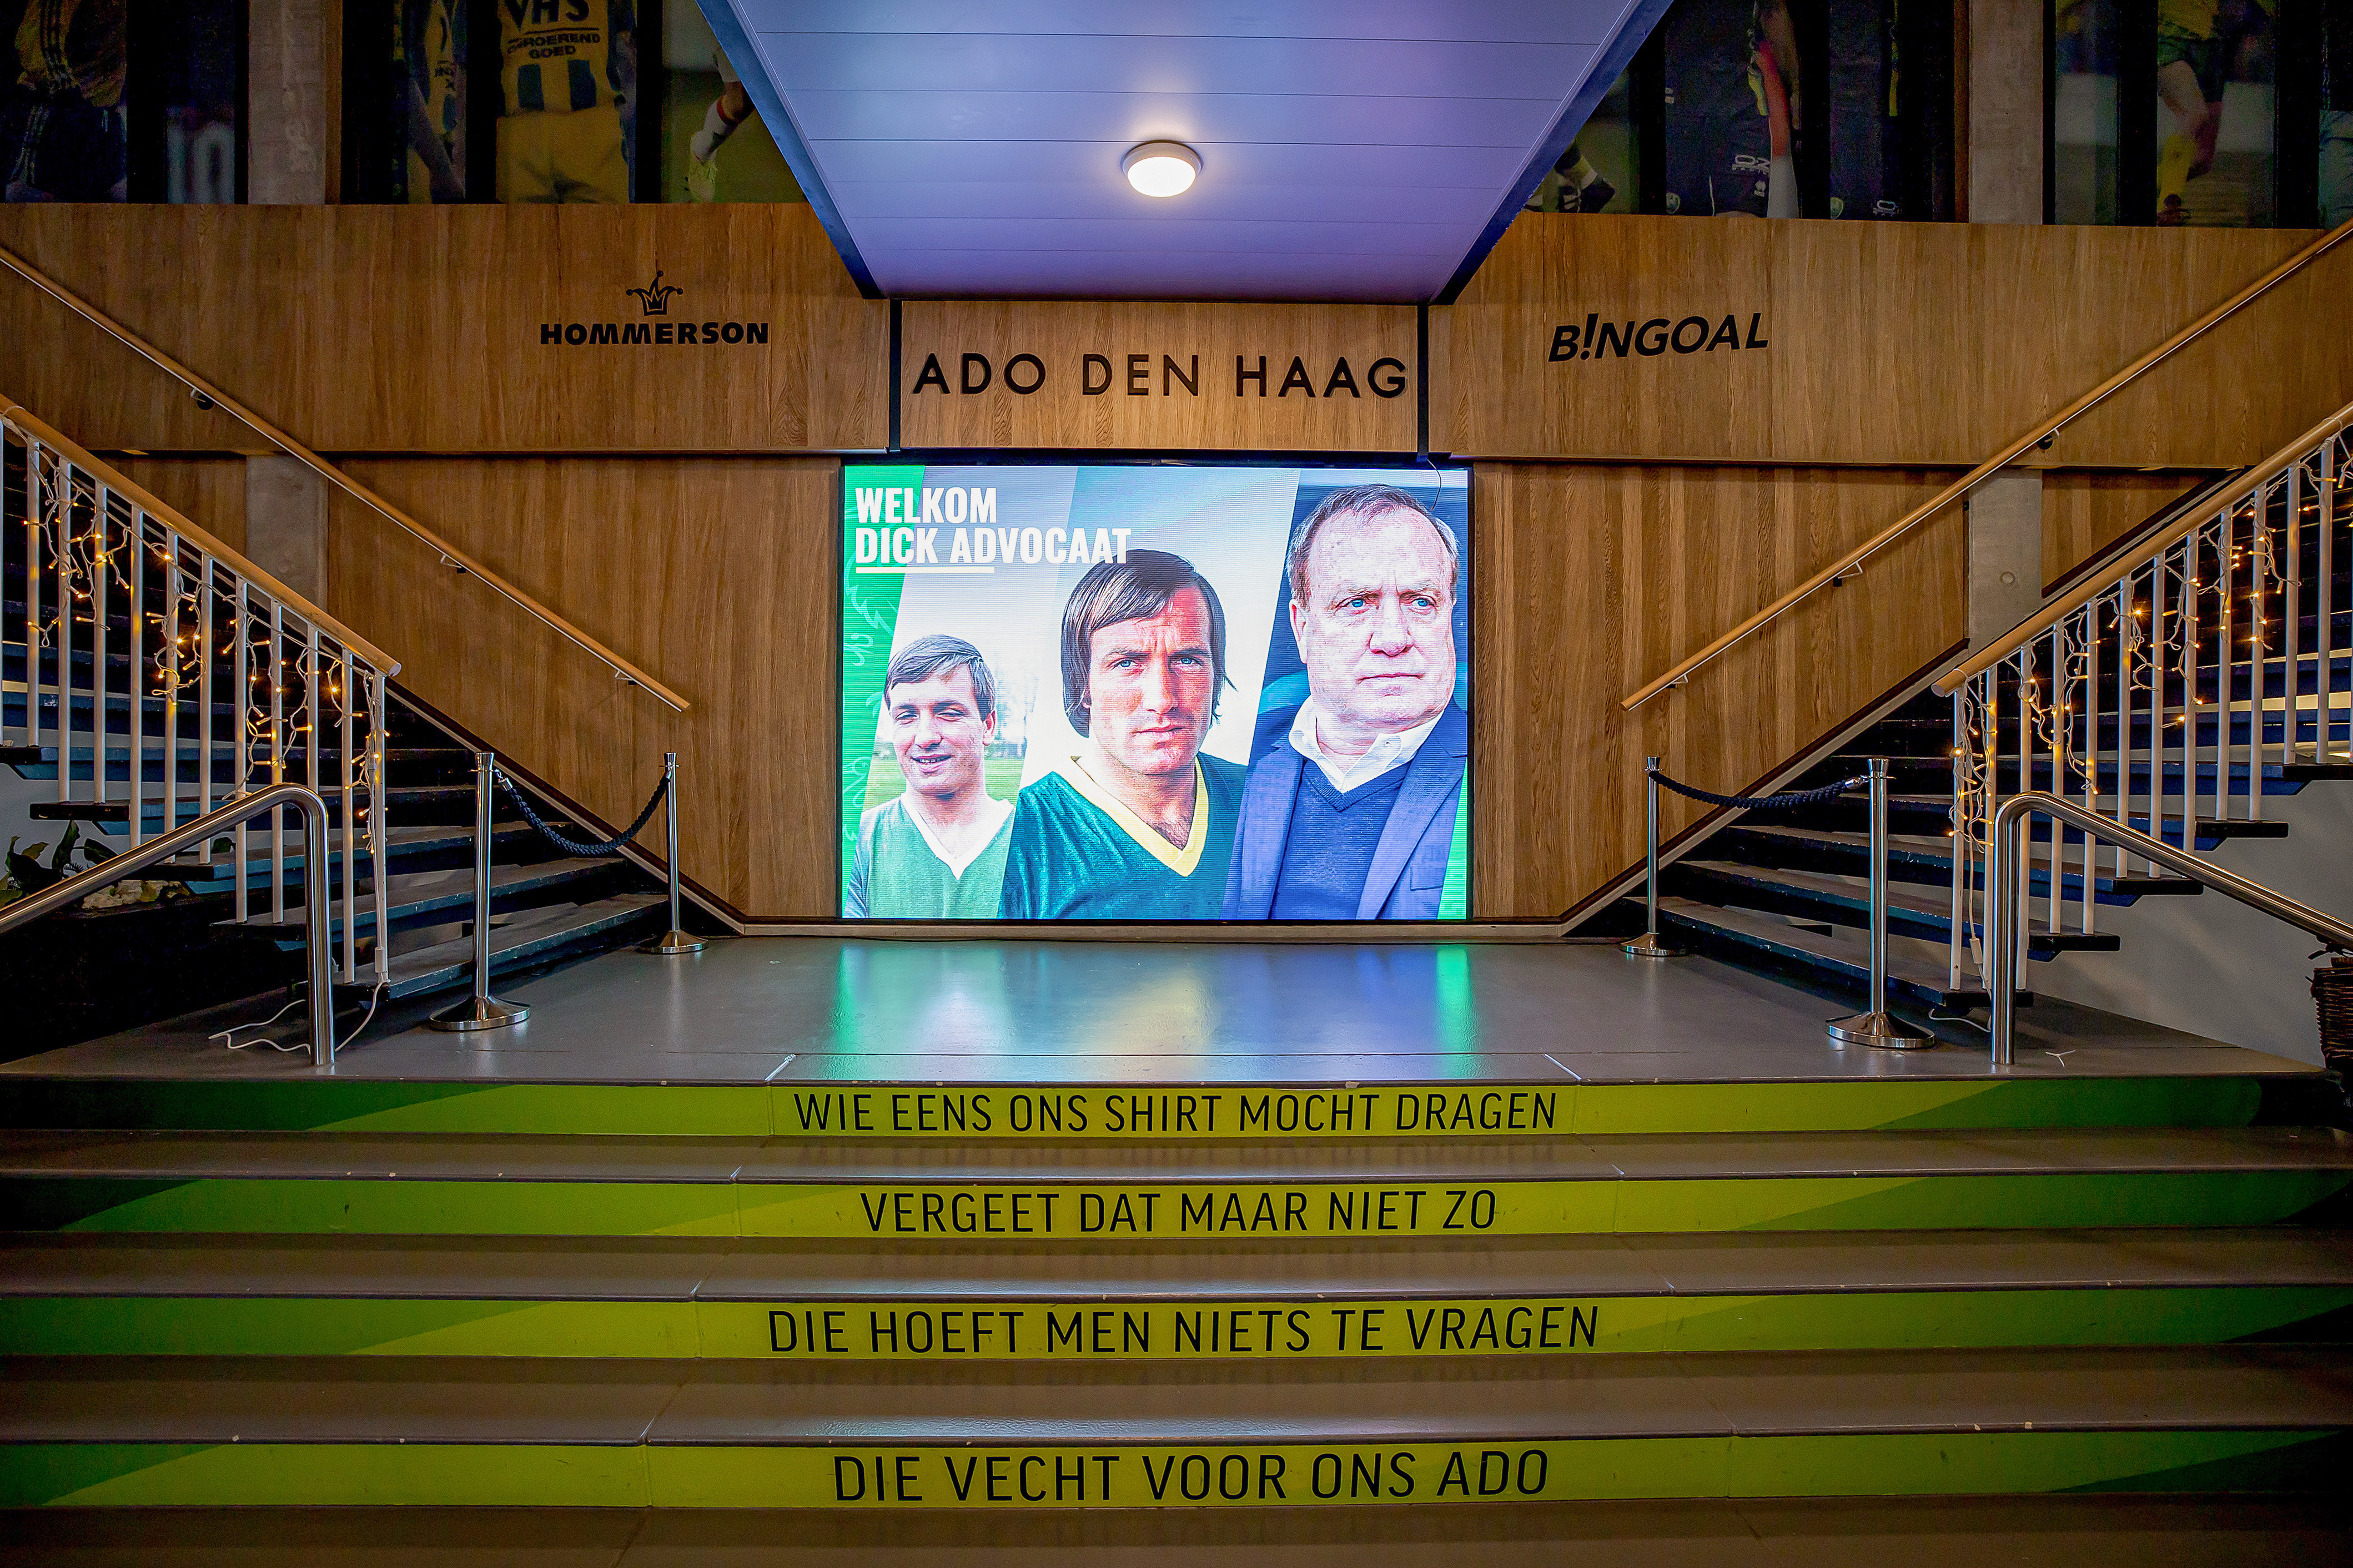 videowall of coach *Dick Advocaat* of ADO Den Haag 